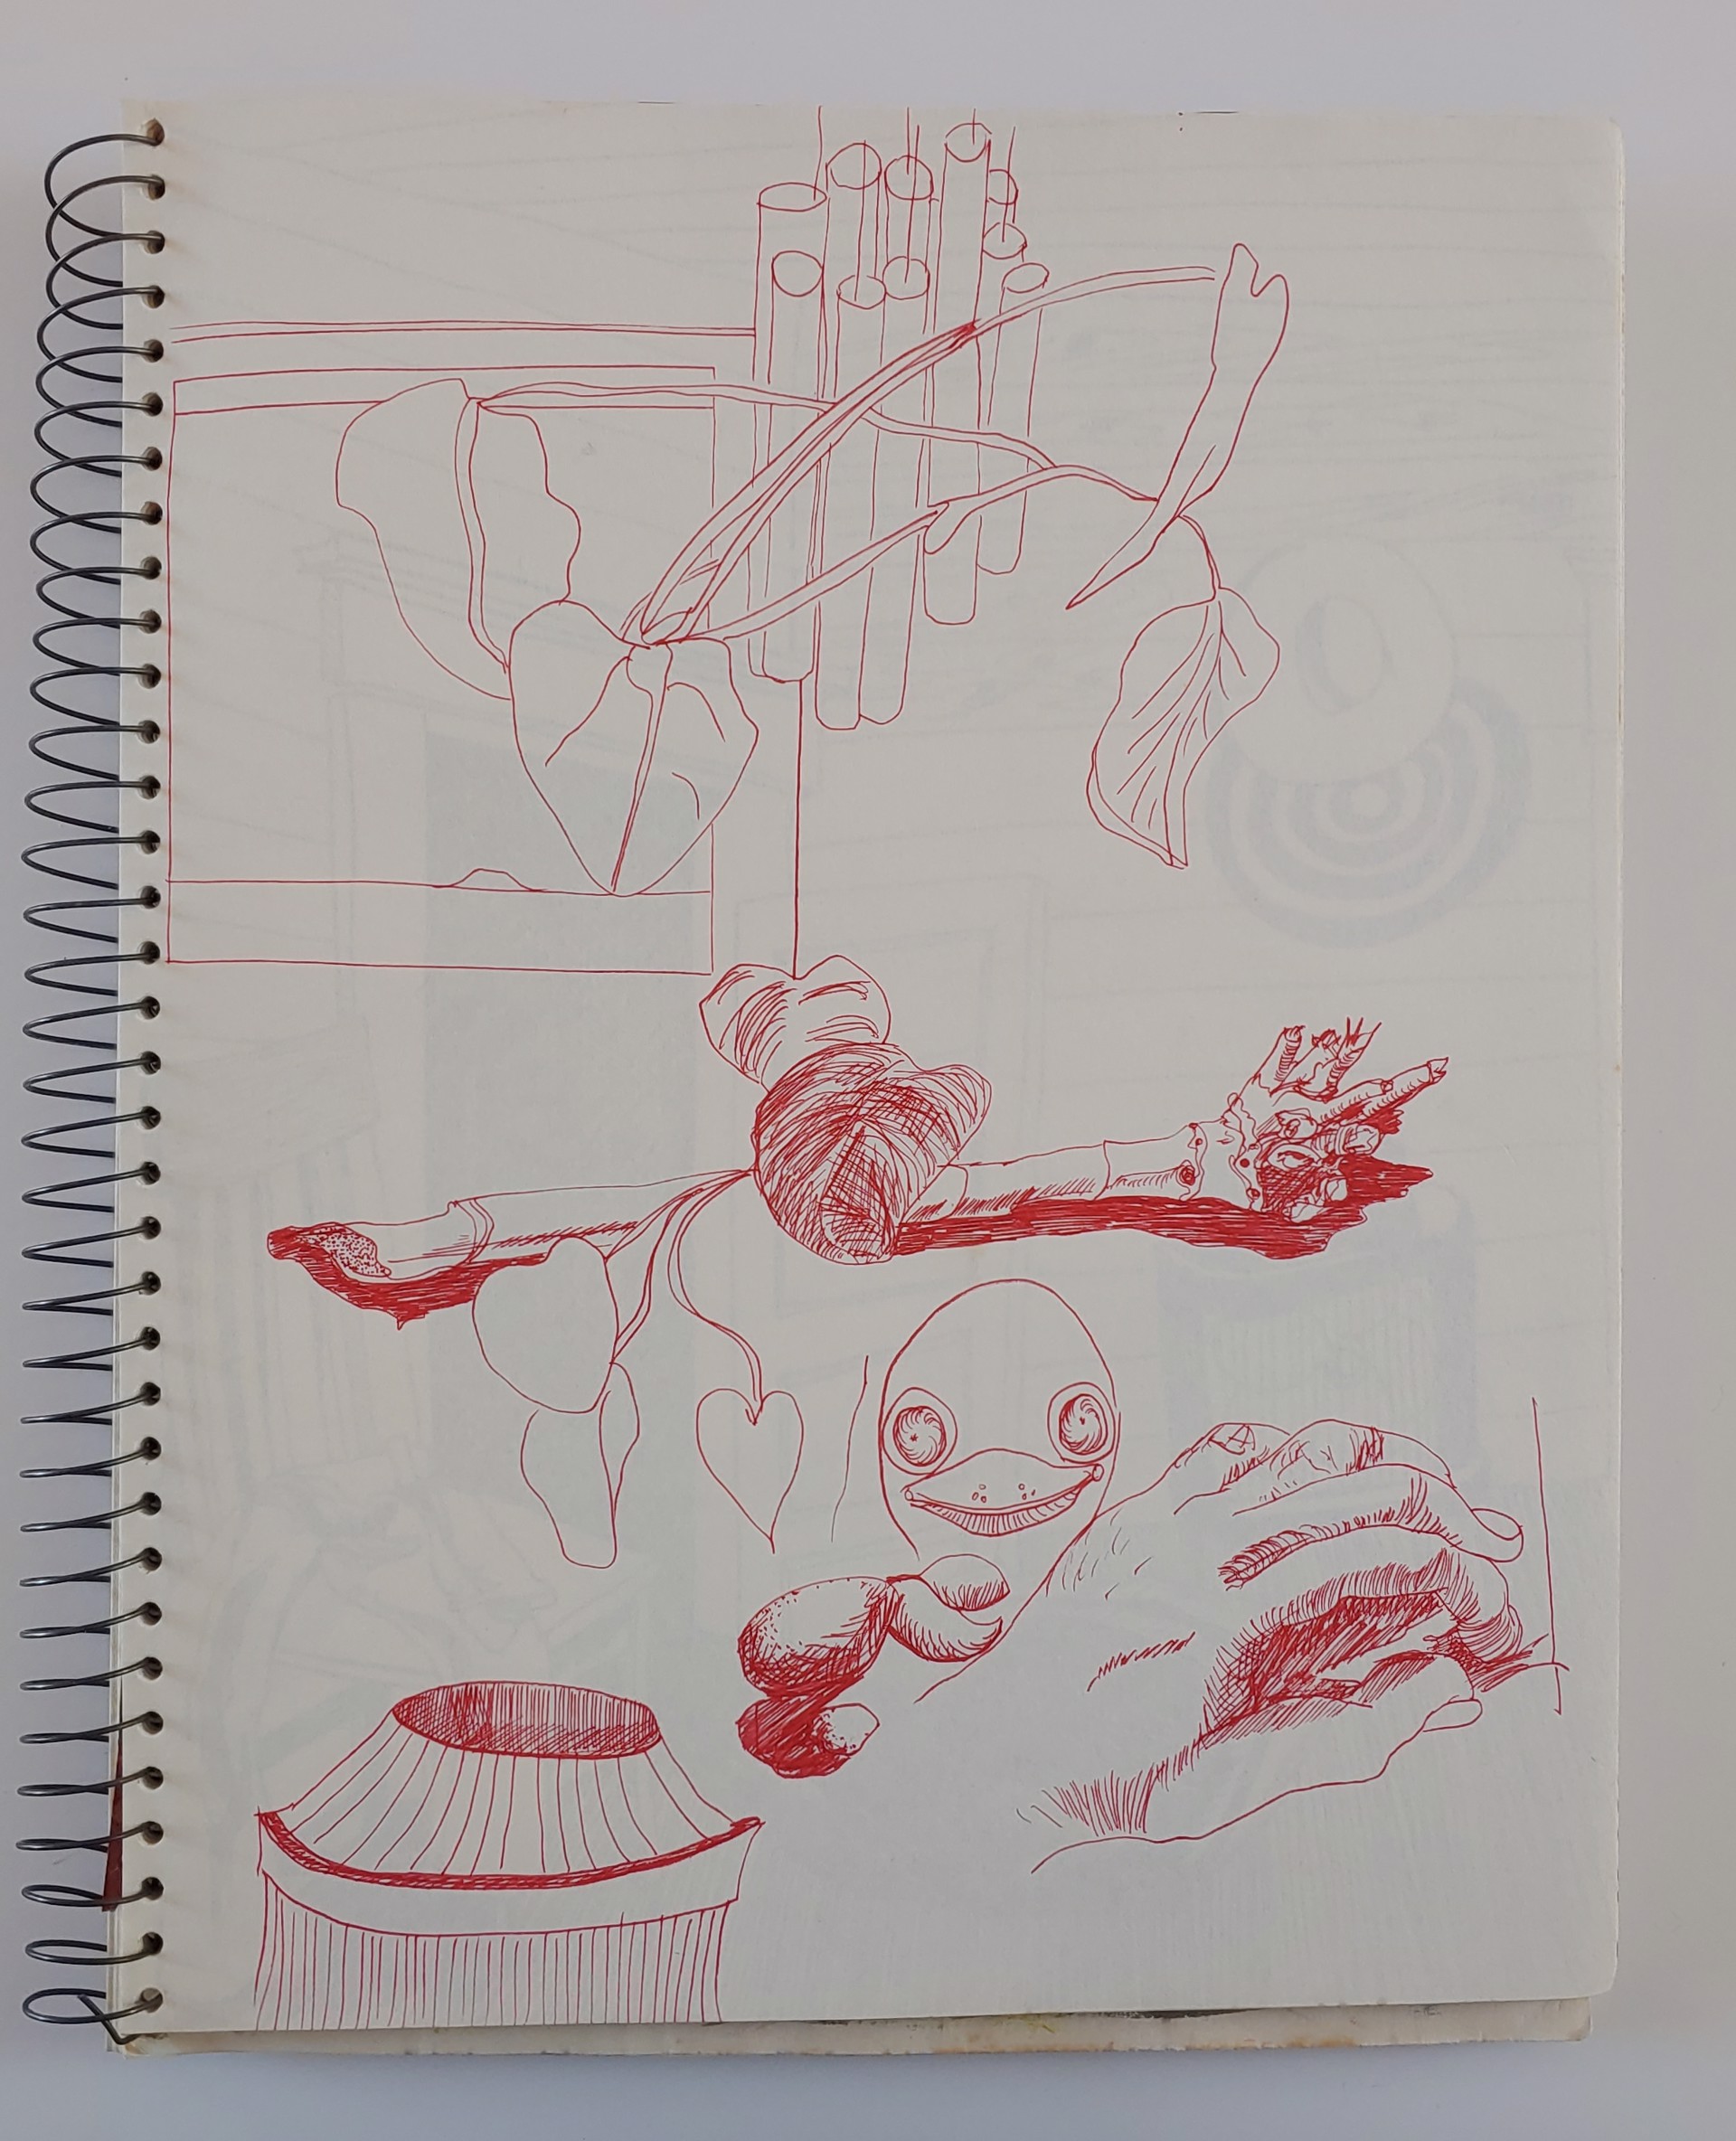 Undated Sketchbook by David Amdur